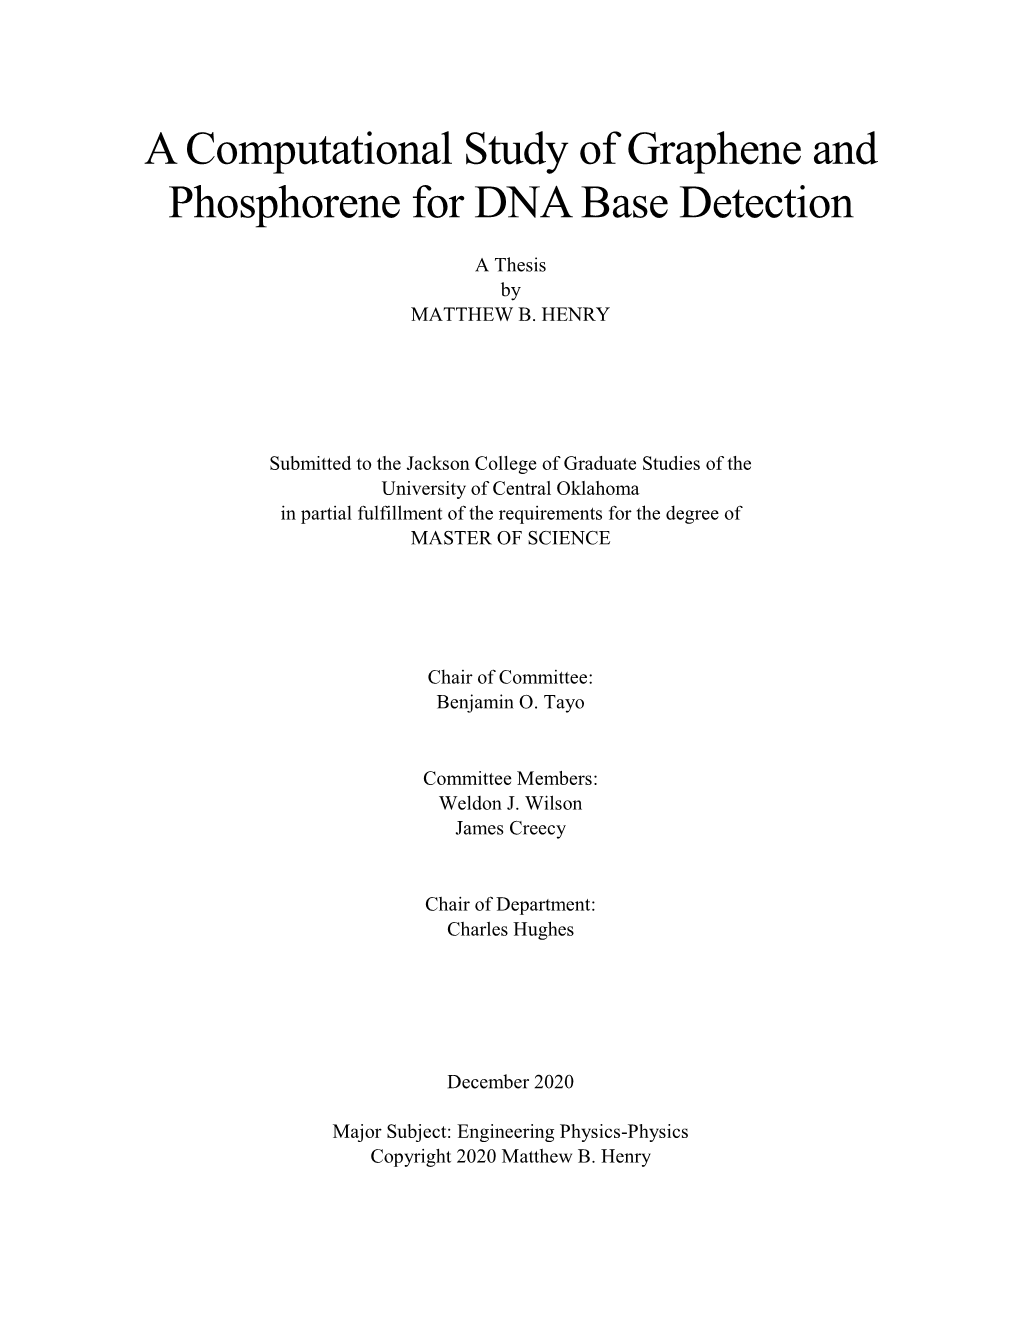 A Computational Study of Graphene and Phosphorene for DNA Base Detection